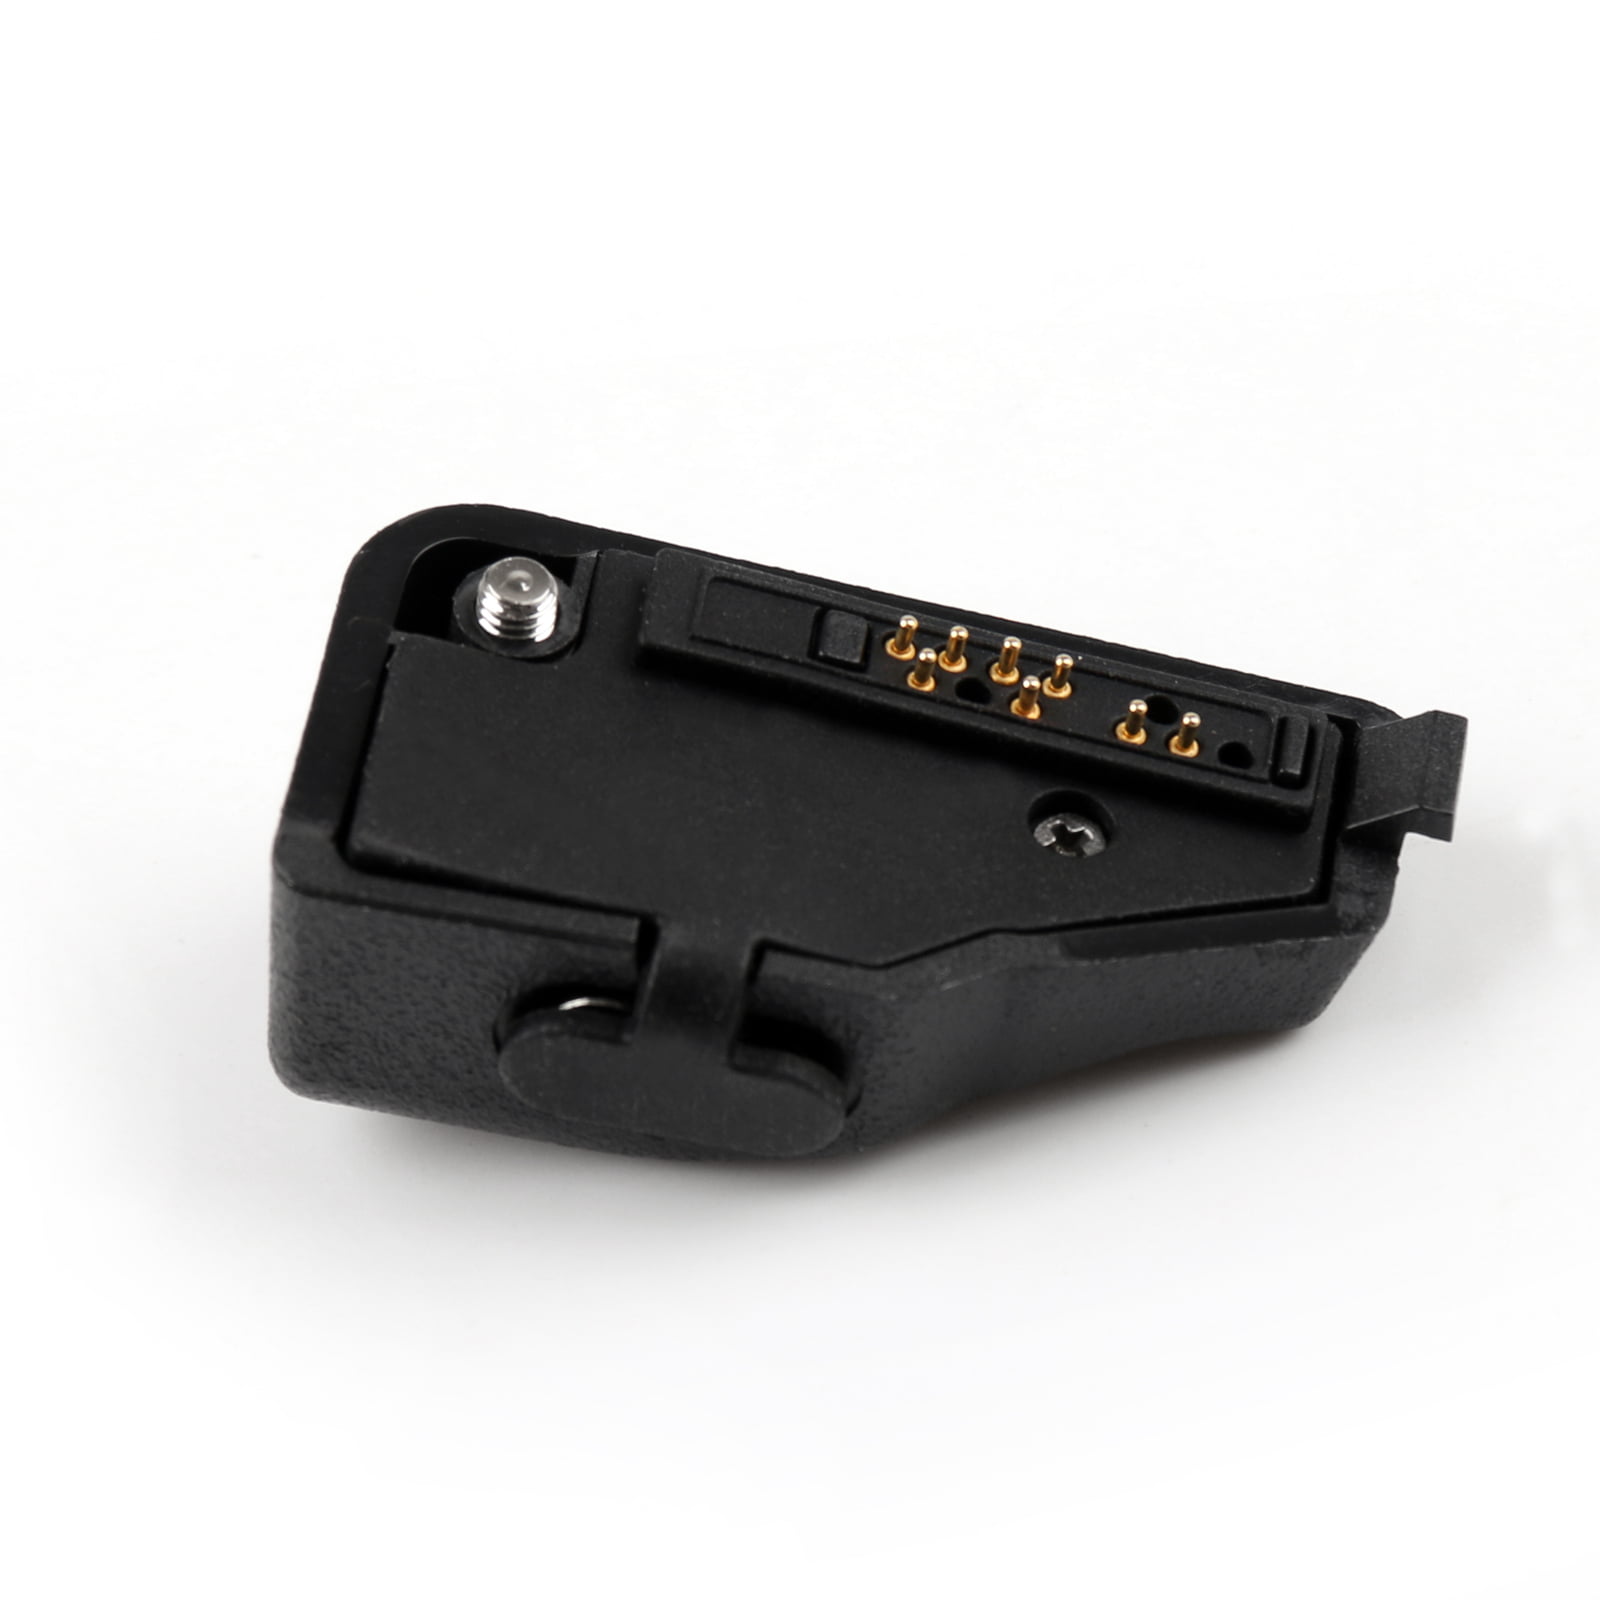 1xMulti Pin To 2 Pin Earpiece Adapter Fit Kenwood Radio TK280/380/385/3180 UE 